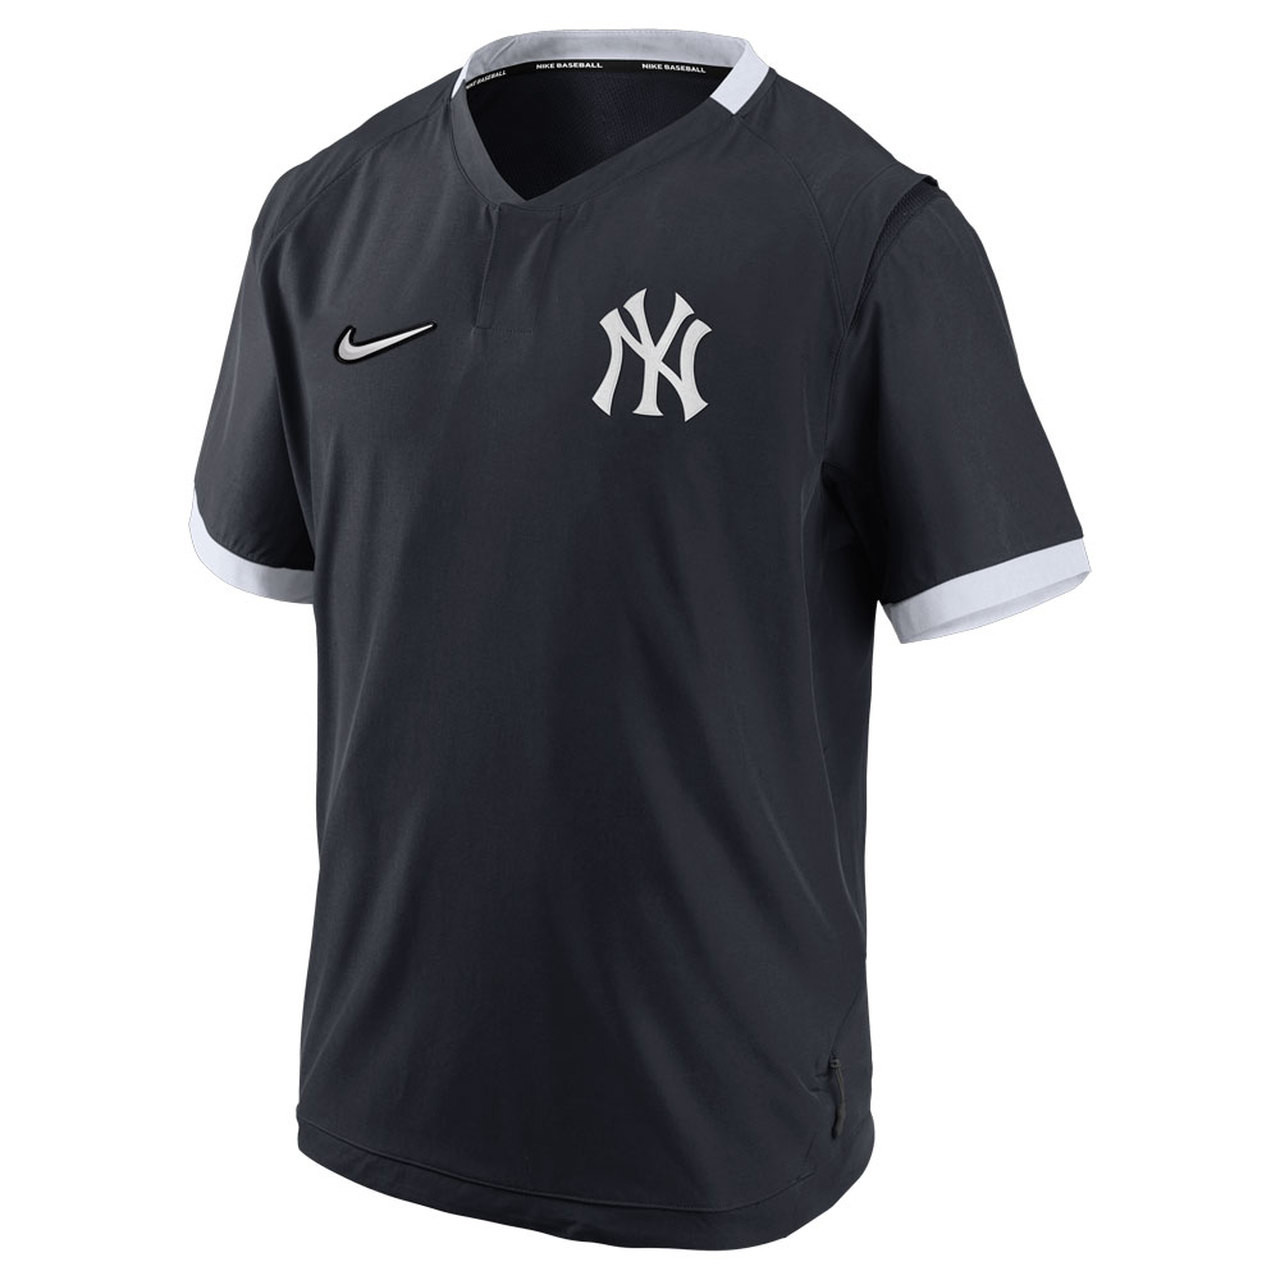 Men's New York Yankees Nike Therma Performance Pullover Hood